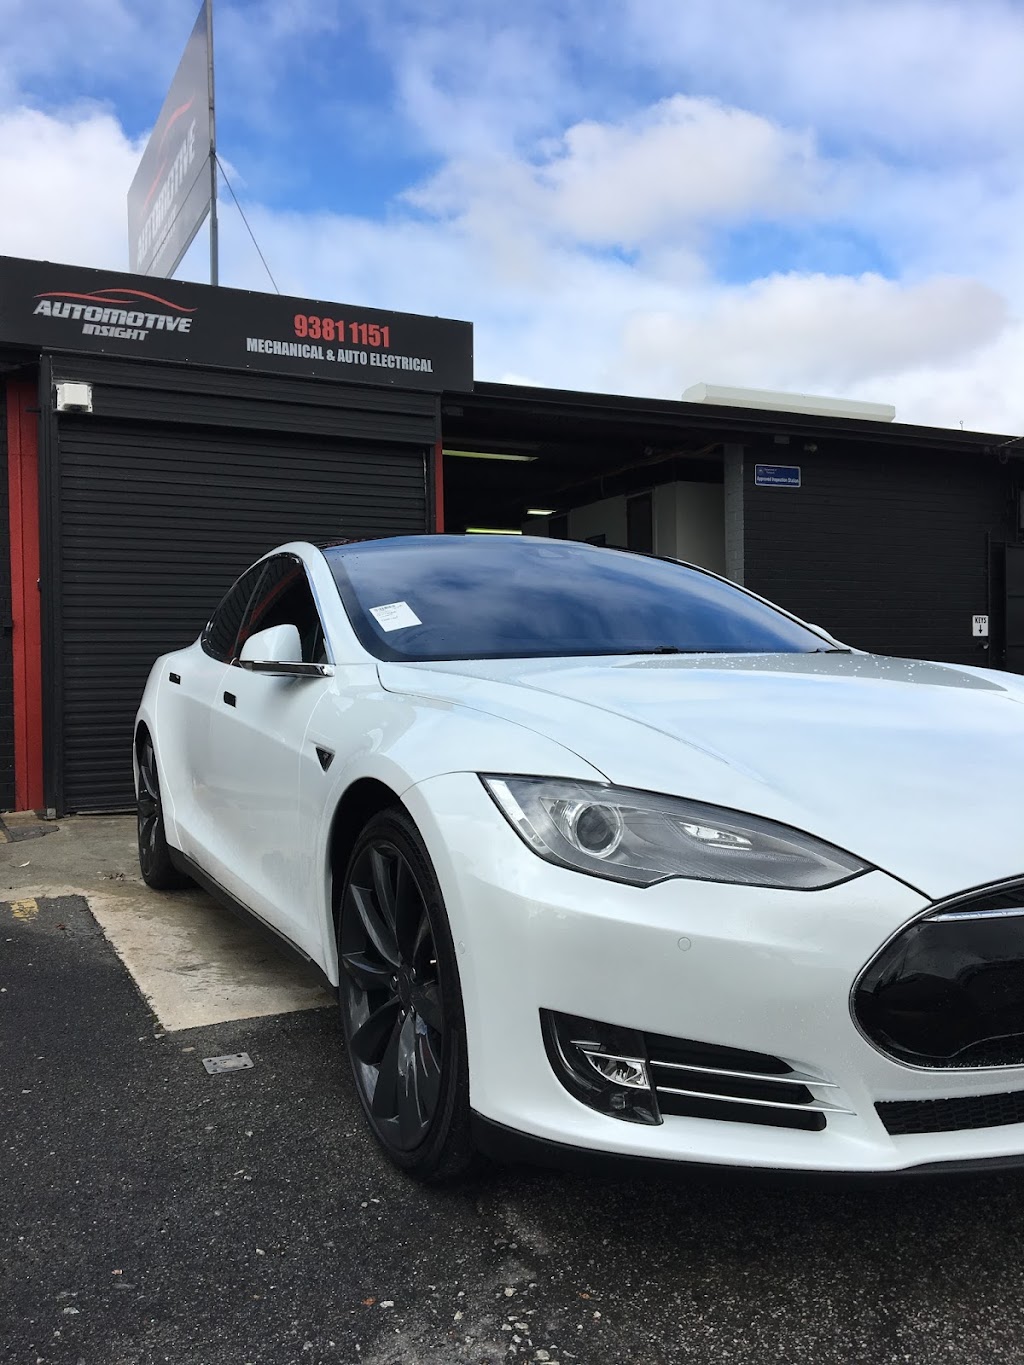 Automotive Insight | 206A Stubbs Terrace, Shenton Park WA 6008, Australia | Phone: (08) 9381 1151